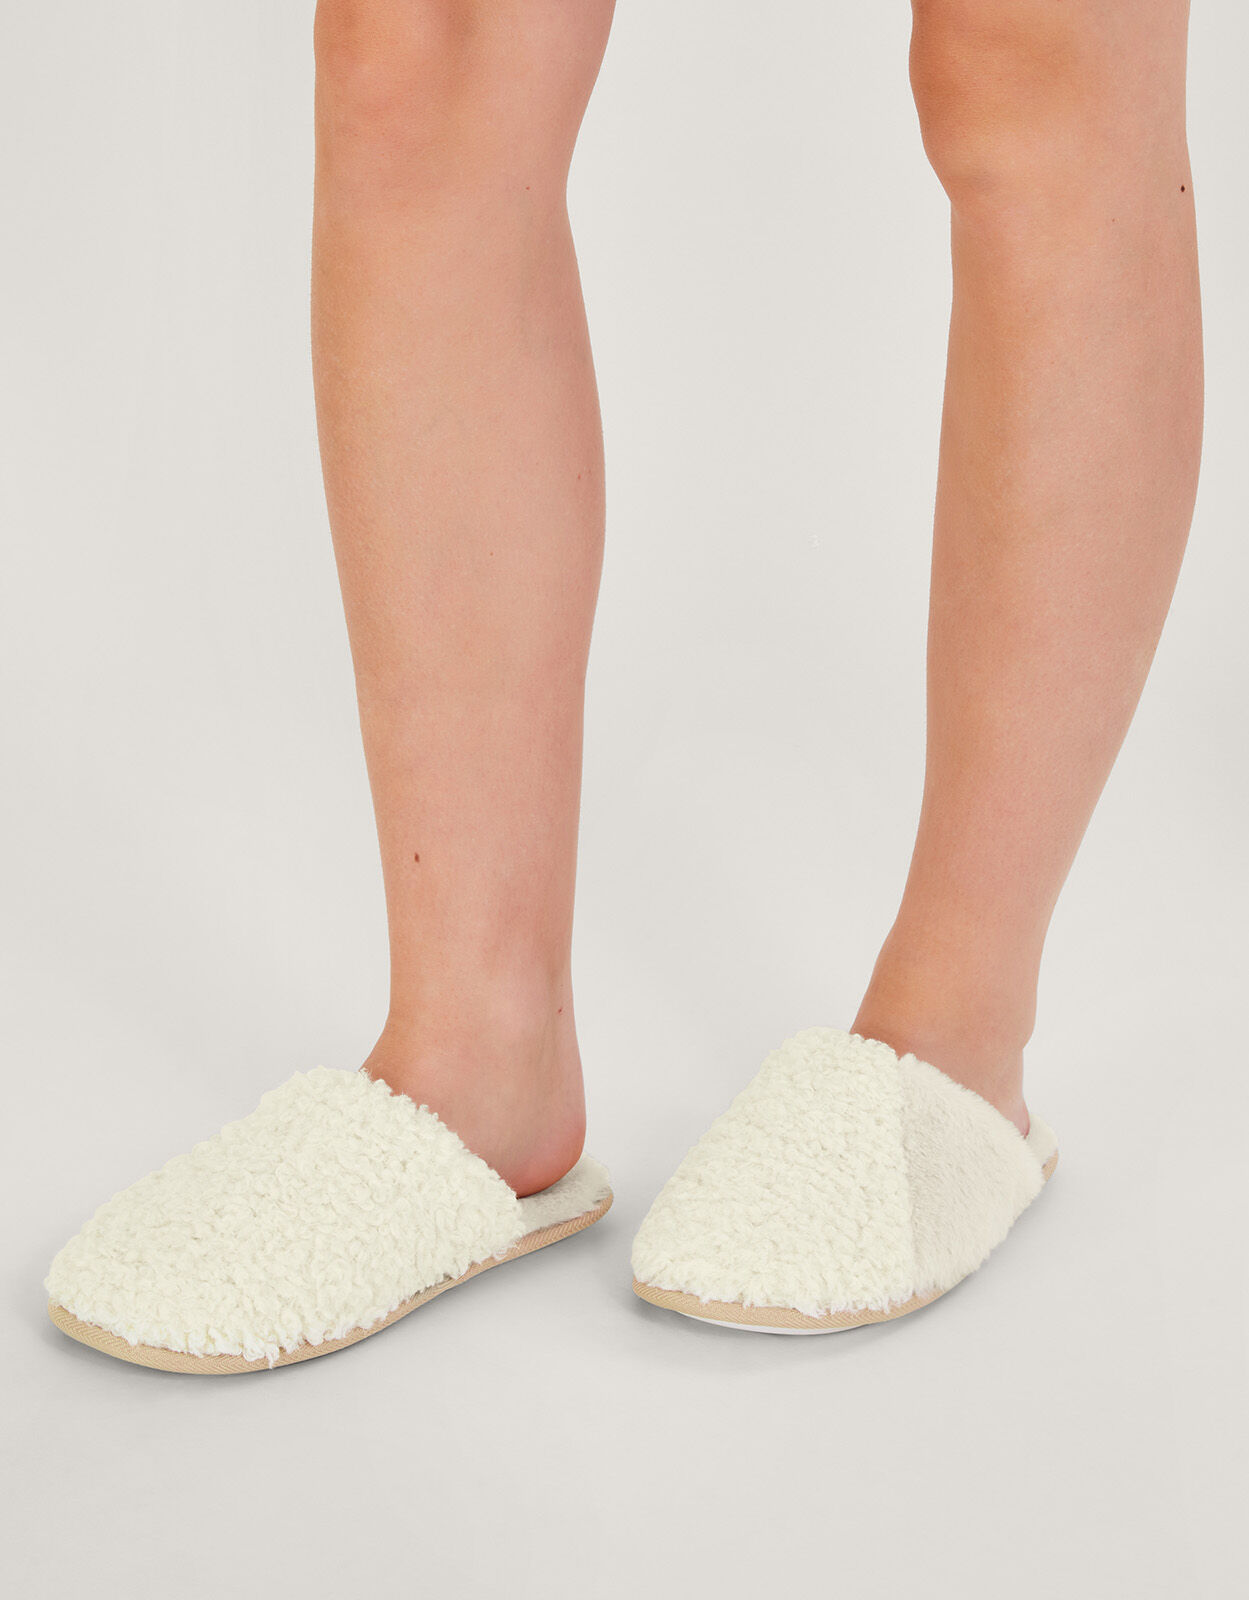 Monsoon Women Cross Stitch Sandals - Adults 5 | eBay